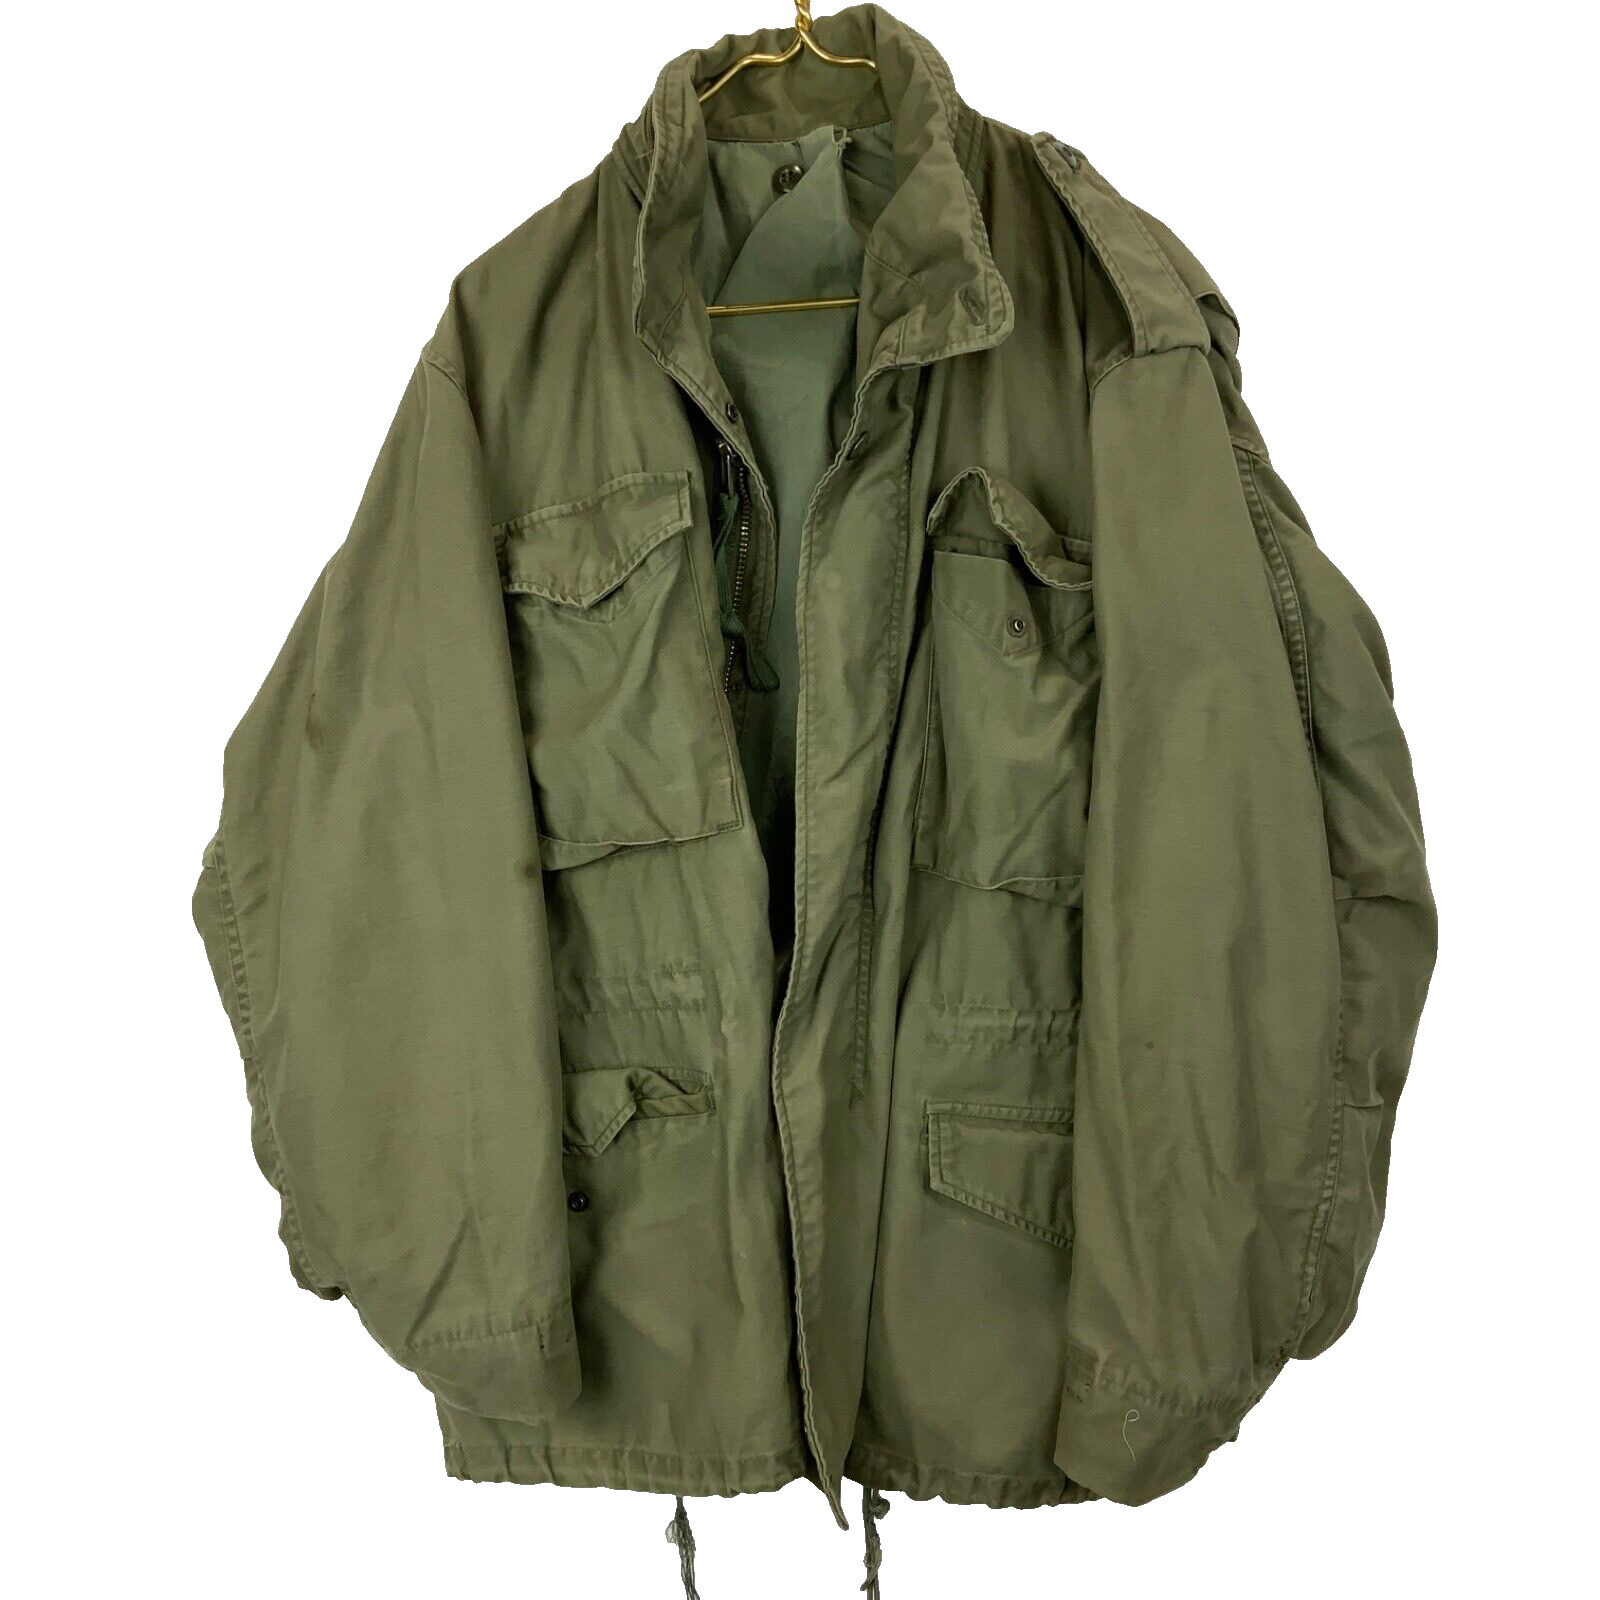 Vintage Us Military Cold Weather Jacket Size Large Green Vietnam Era 1972